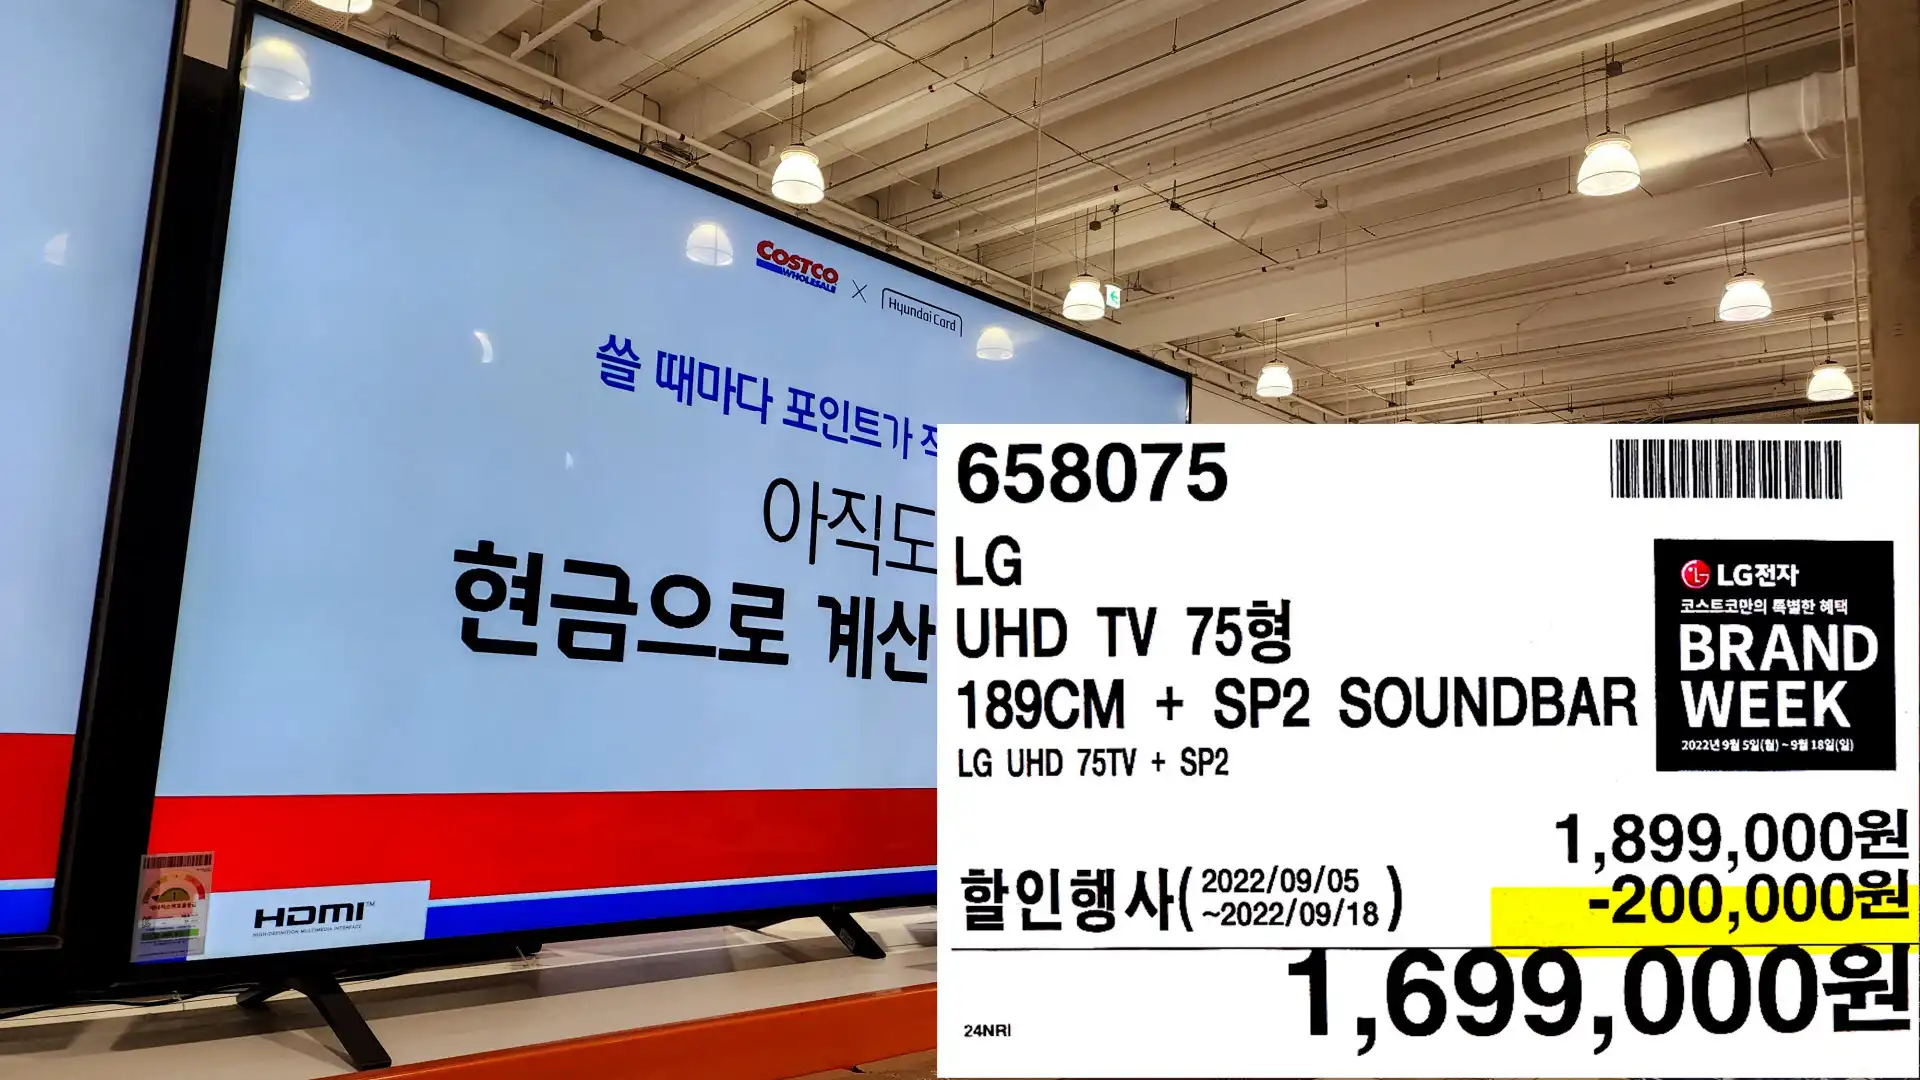 LG
UHD TV 75
189CM+ SP2
LG UHD 75TV + SP2
1&#44;699&#44;000원